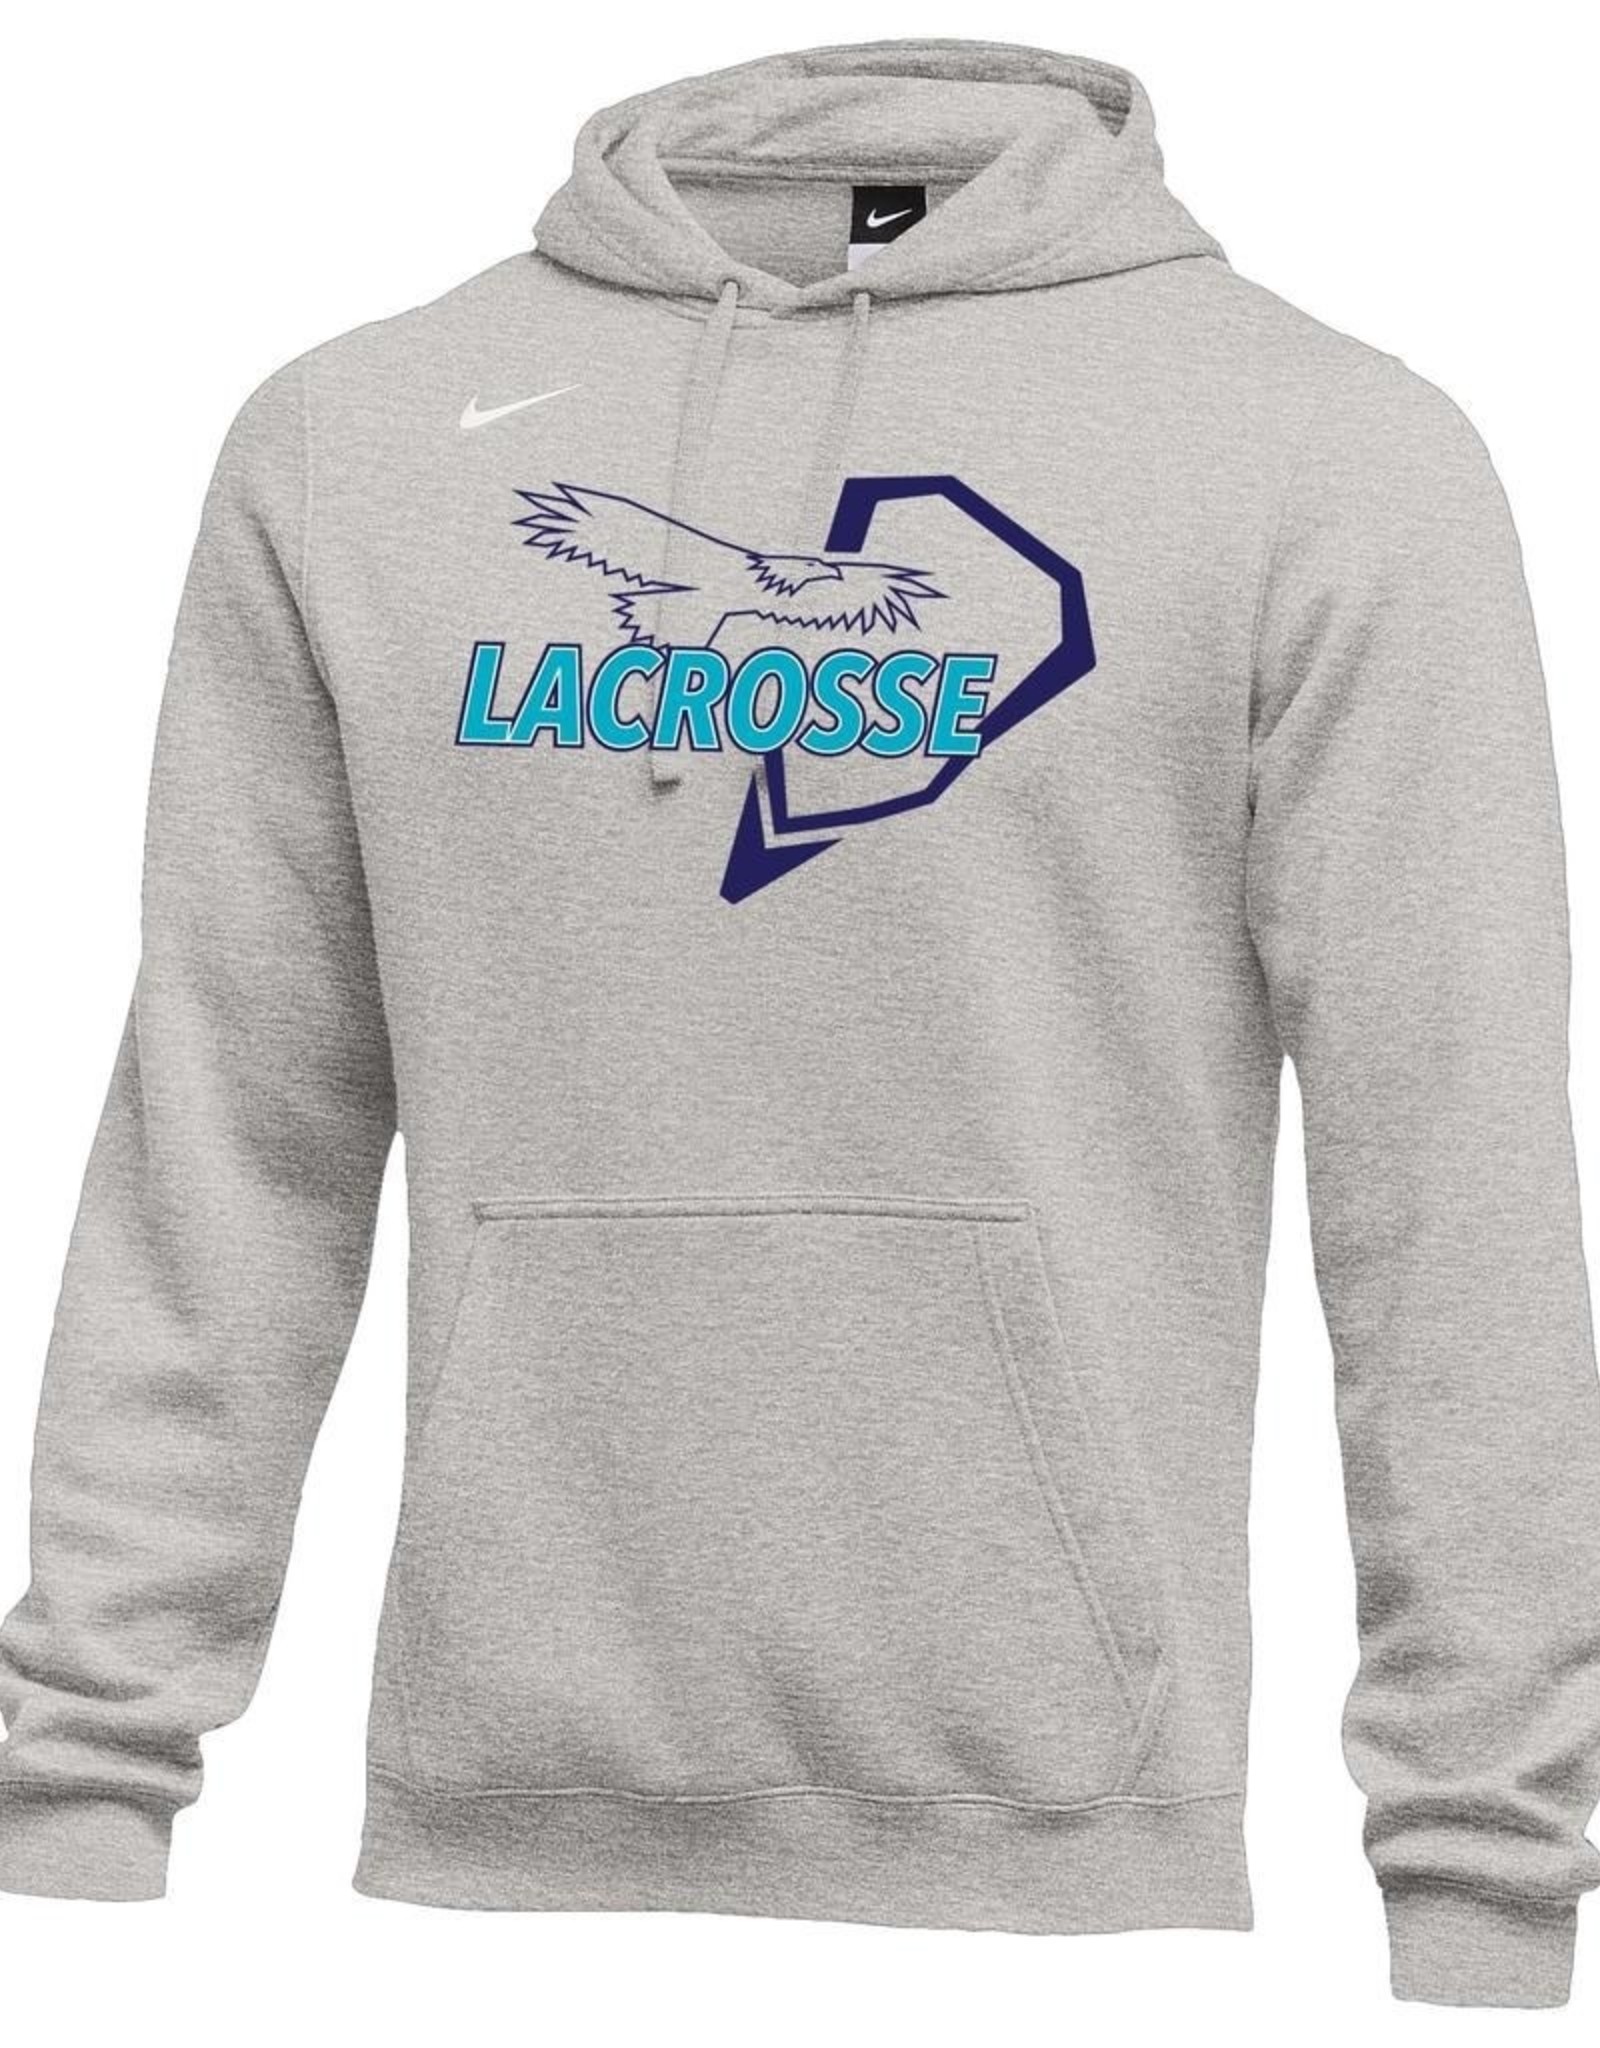 NON-UNIFORM Lacrosse - Custom JD Lacrosse Hooded Sweatshirt, Unisex